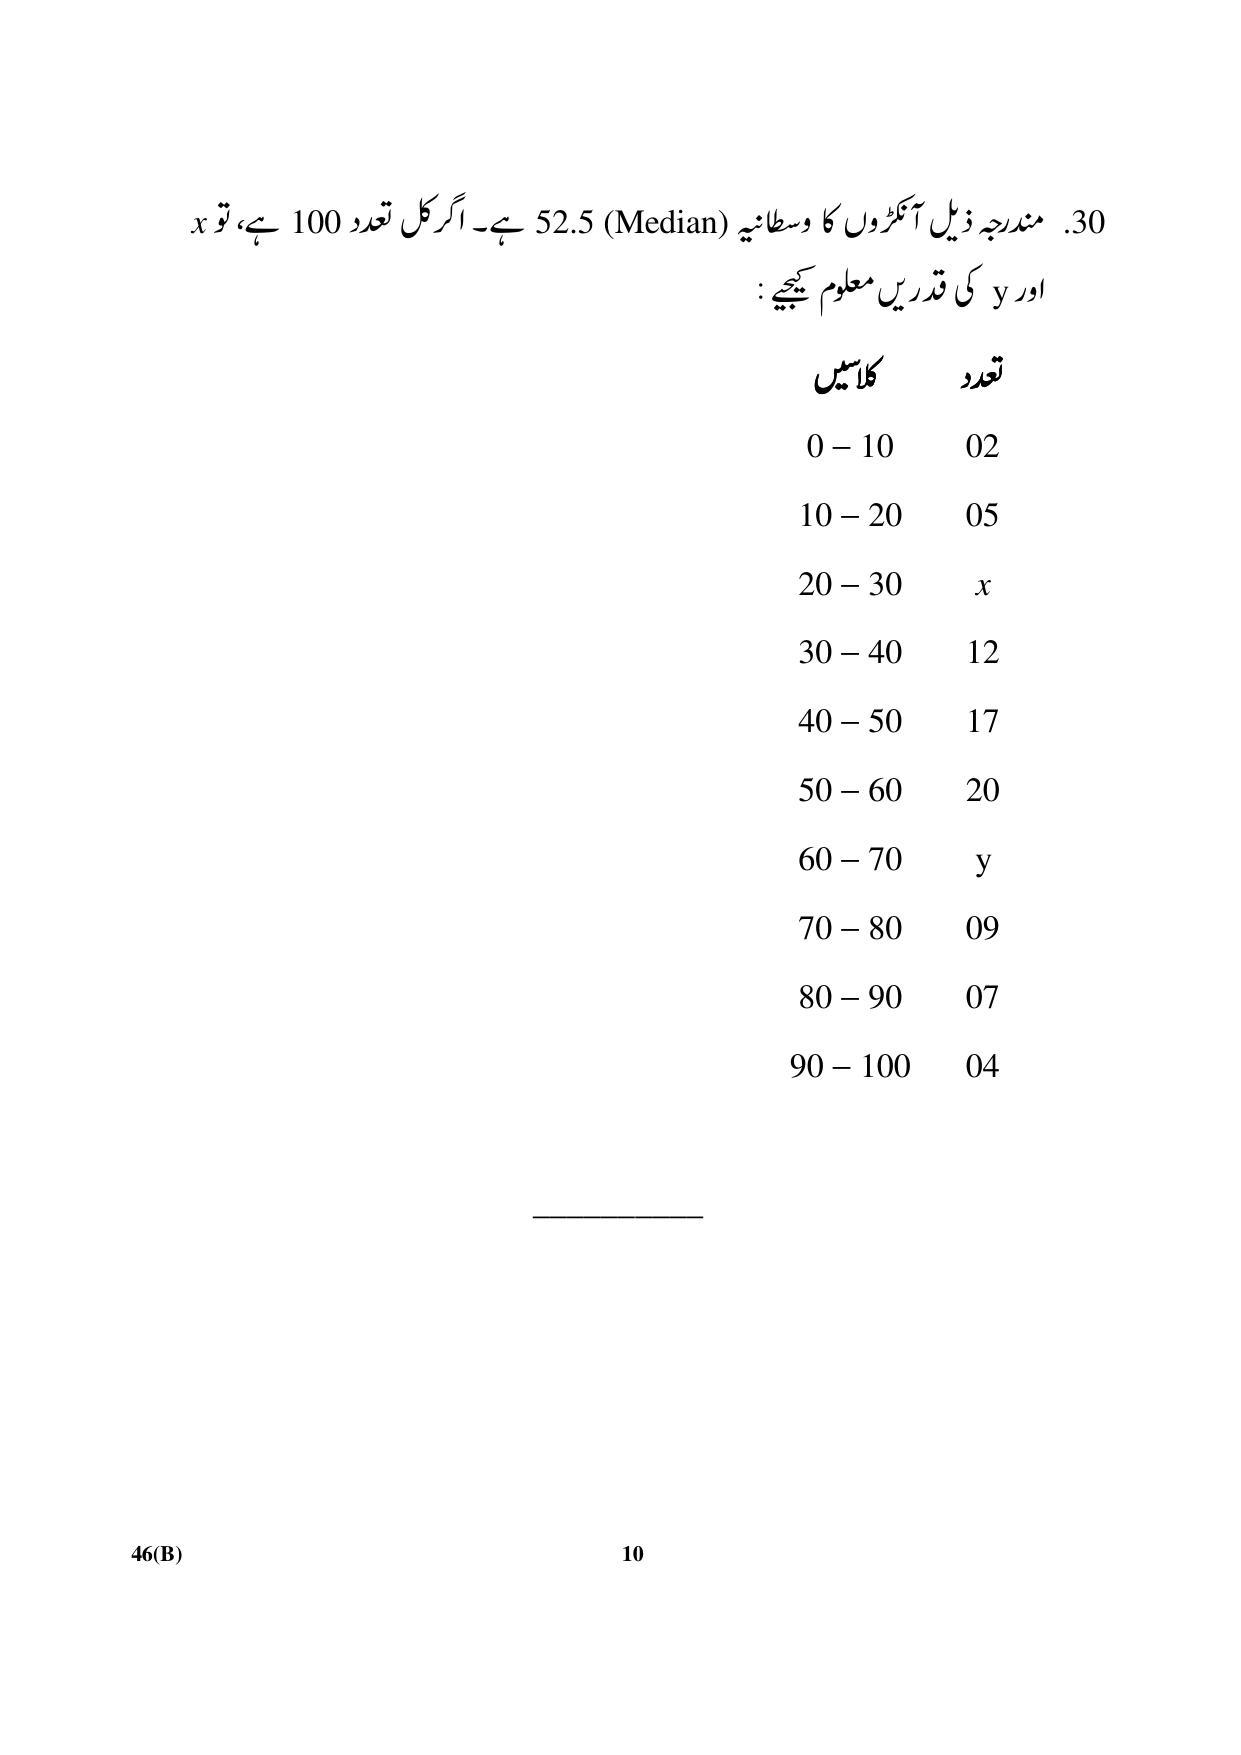 CBSE Class 10 46(B) Maths (For Blind) Urdu Version 2018 Question Paper - Page 10